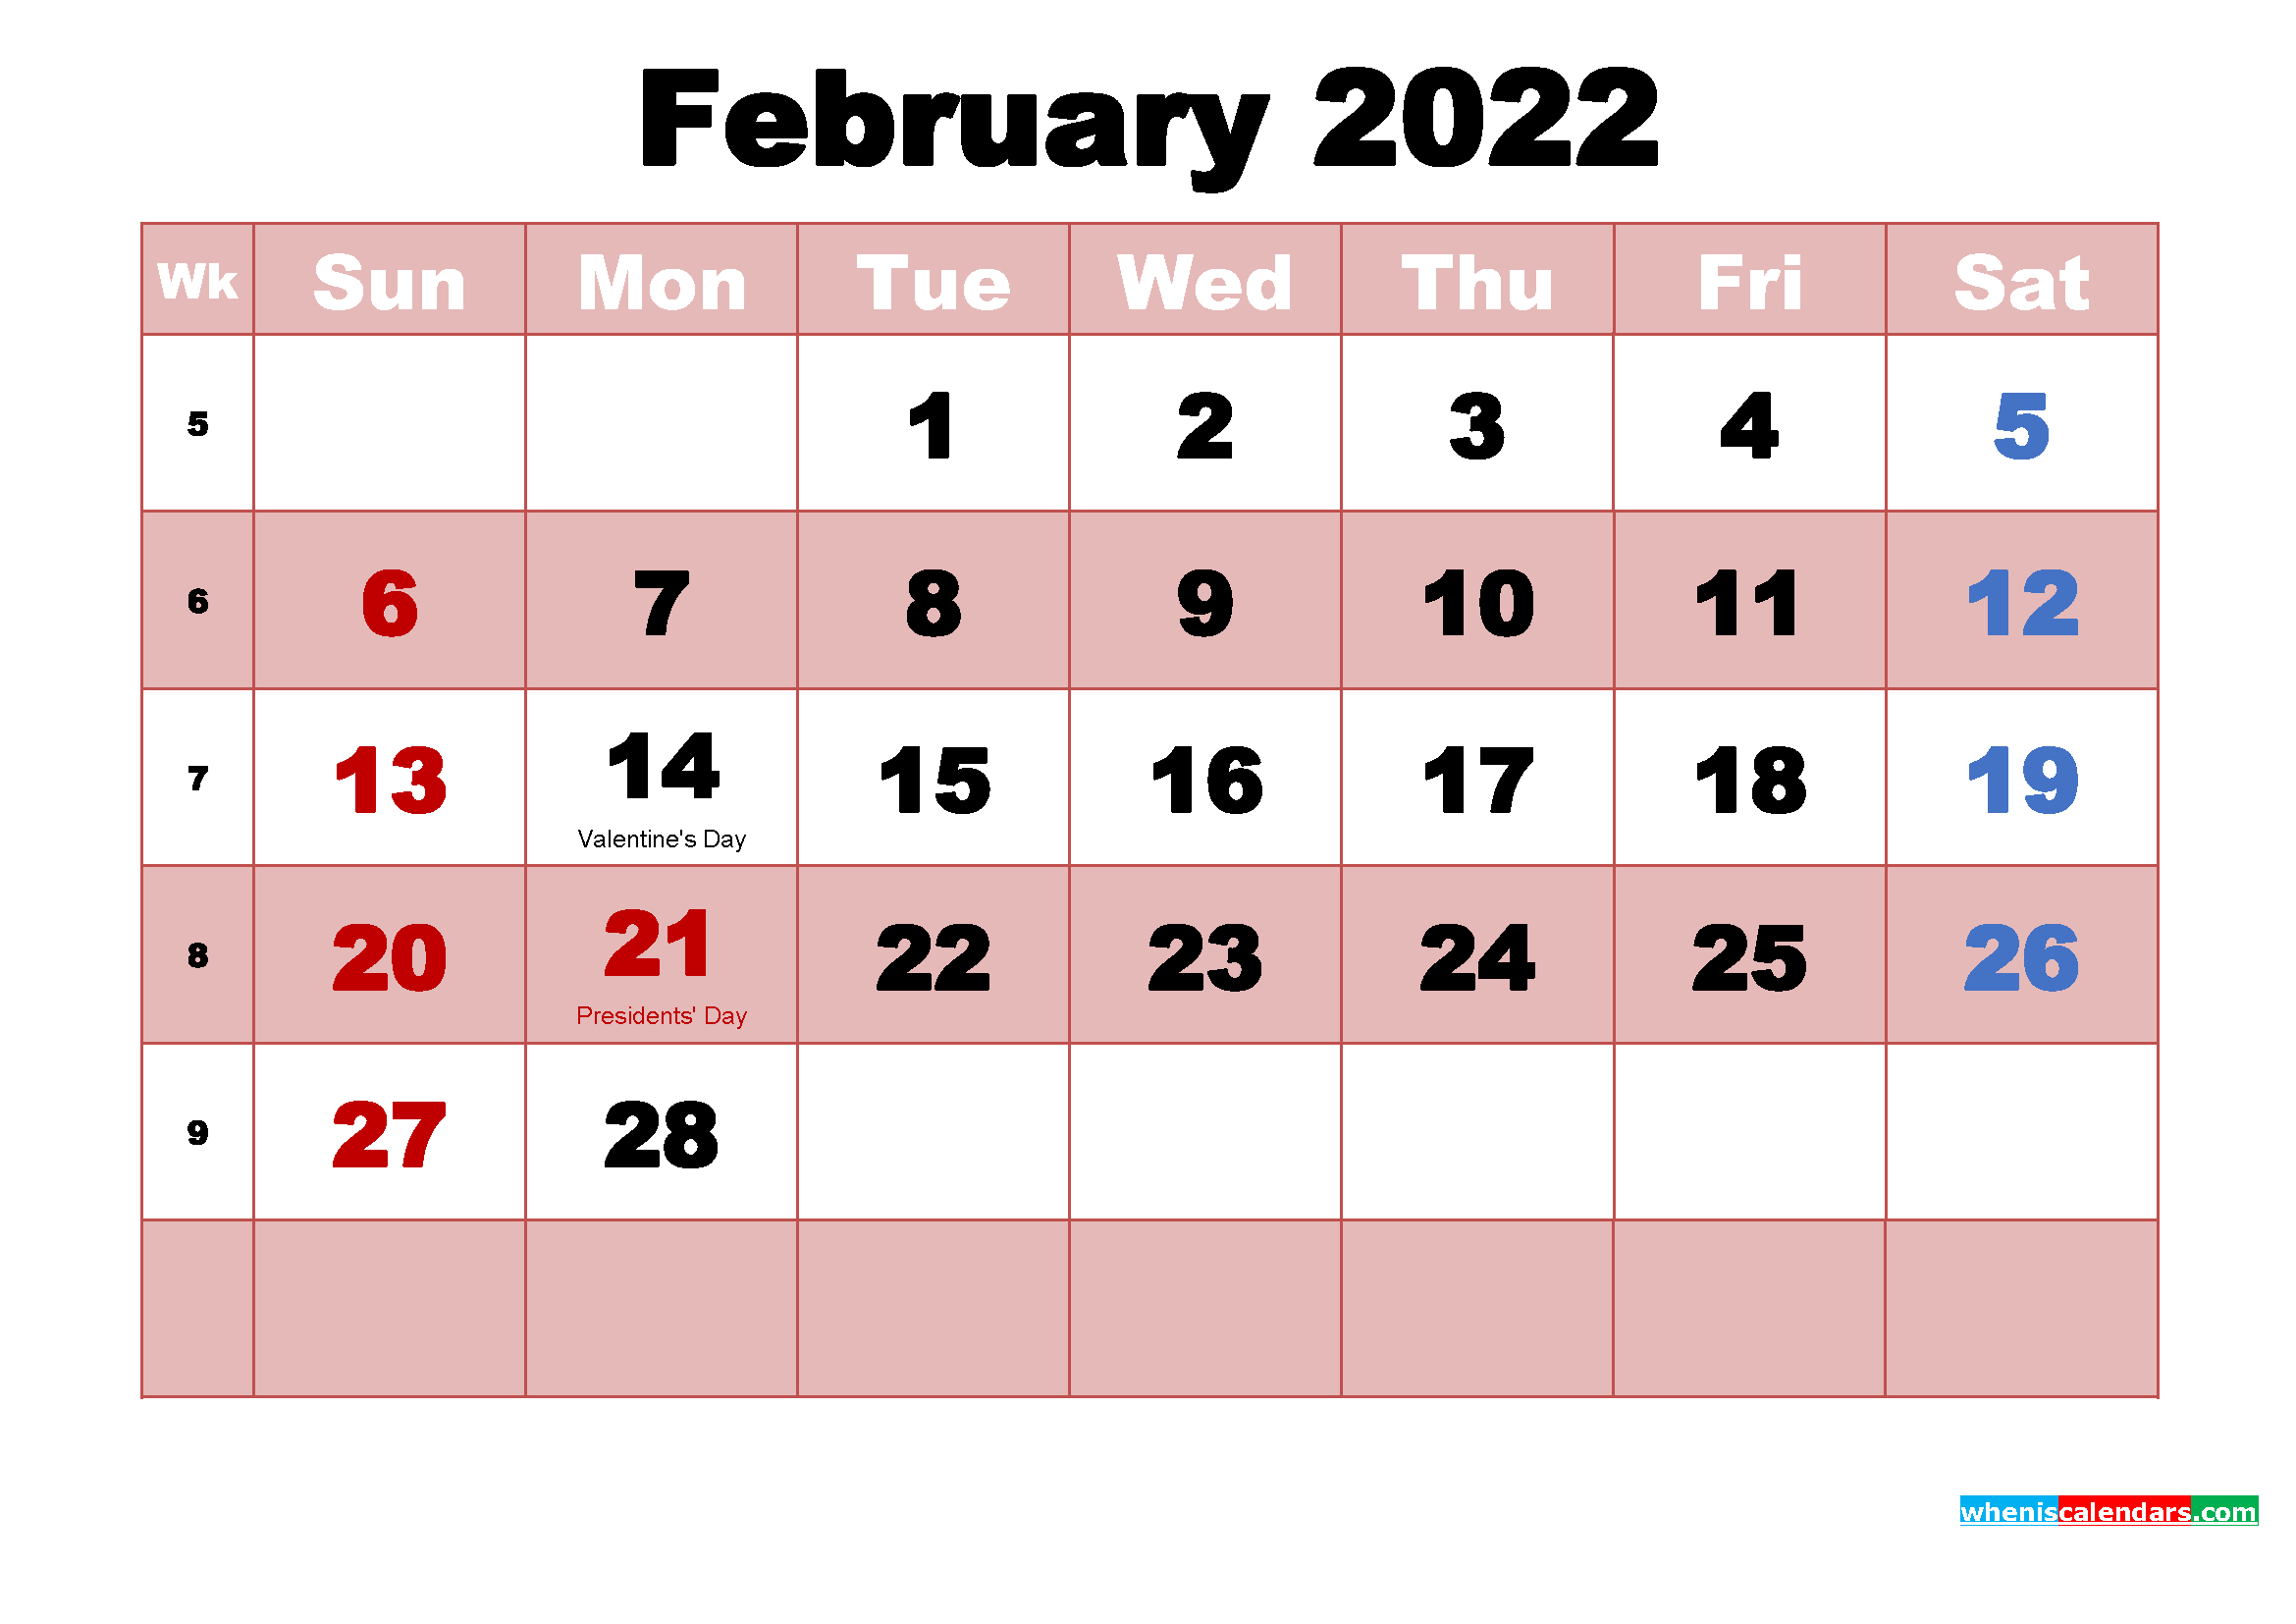 Holidays February 2022 Calendar - Janhbsf